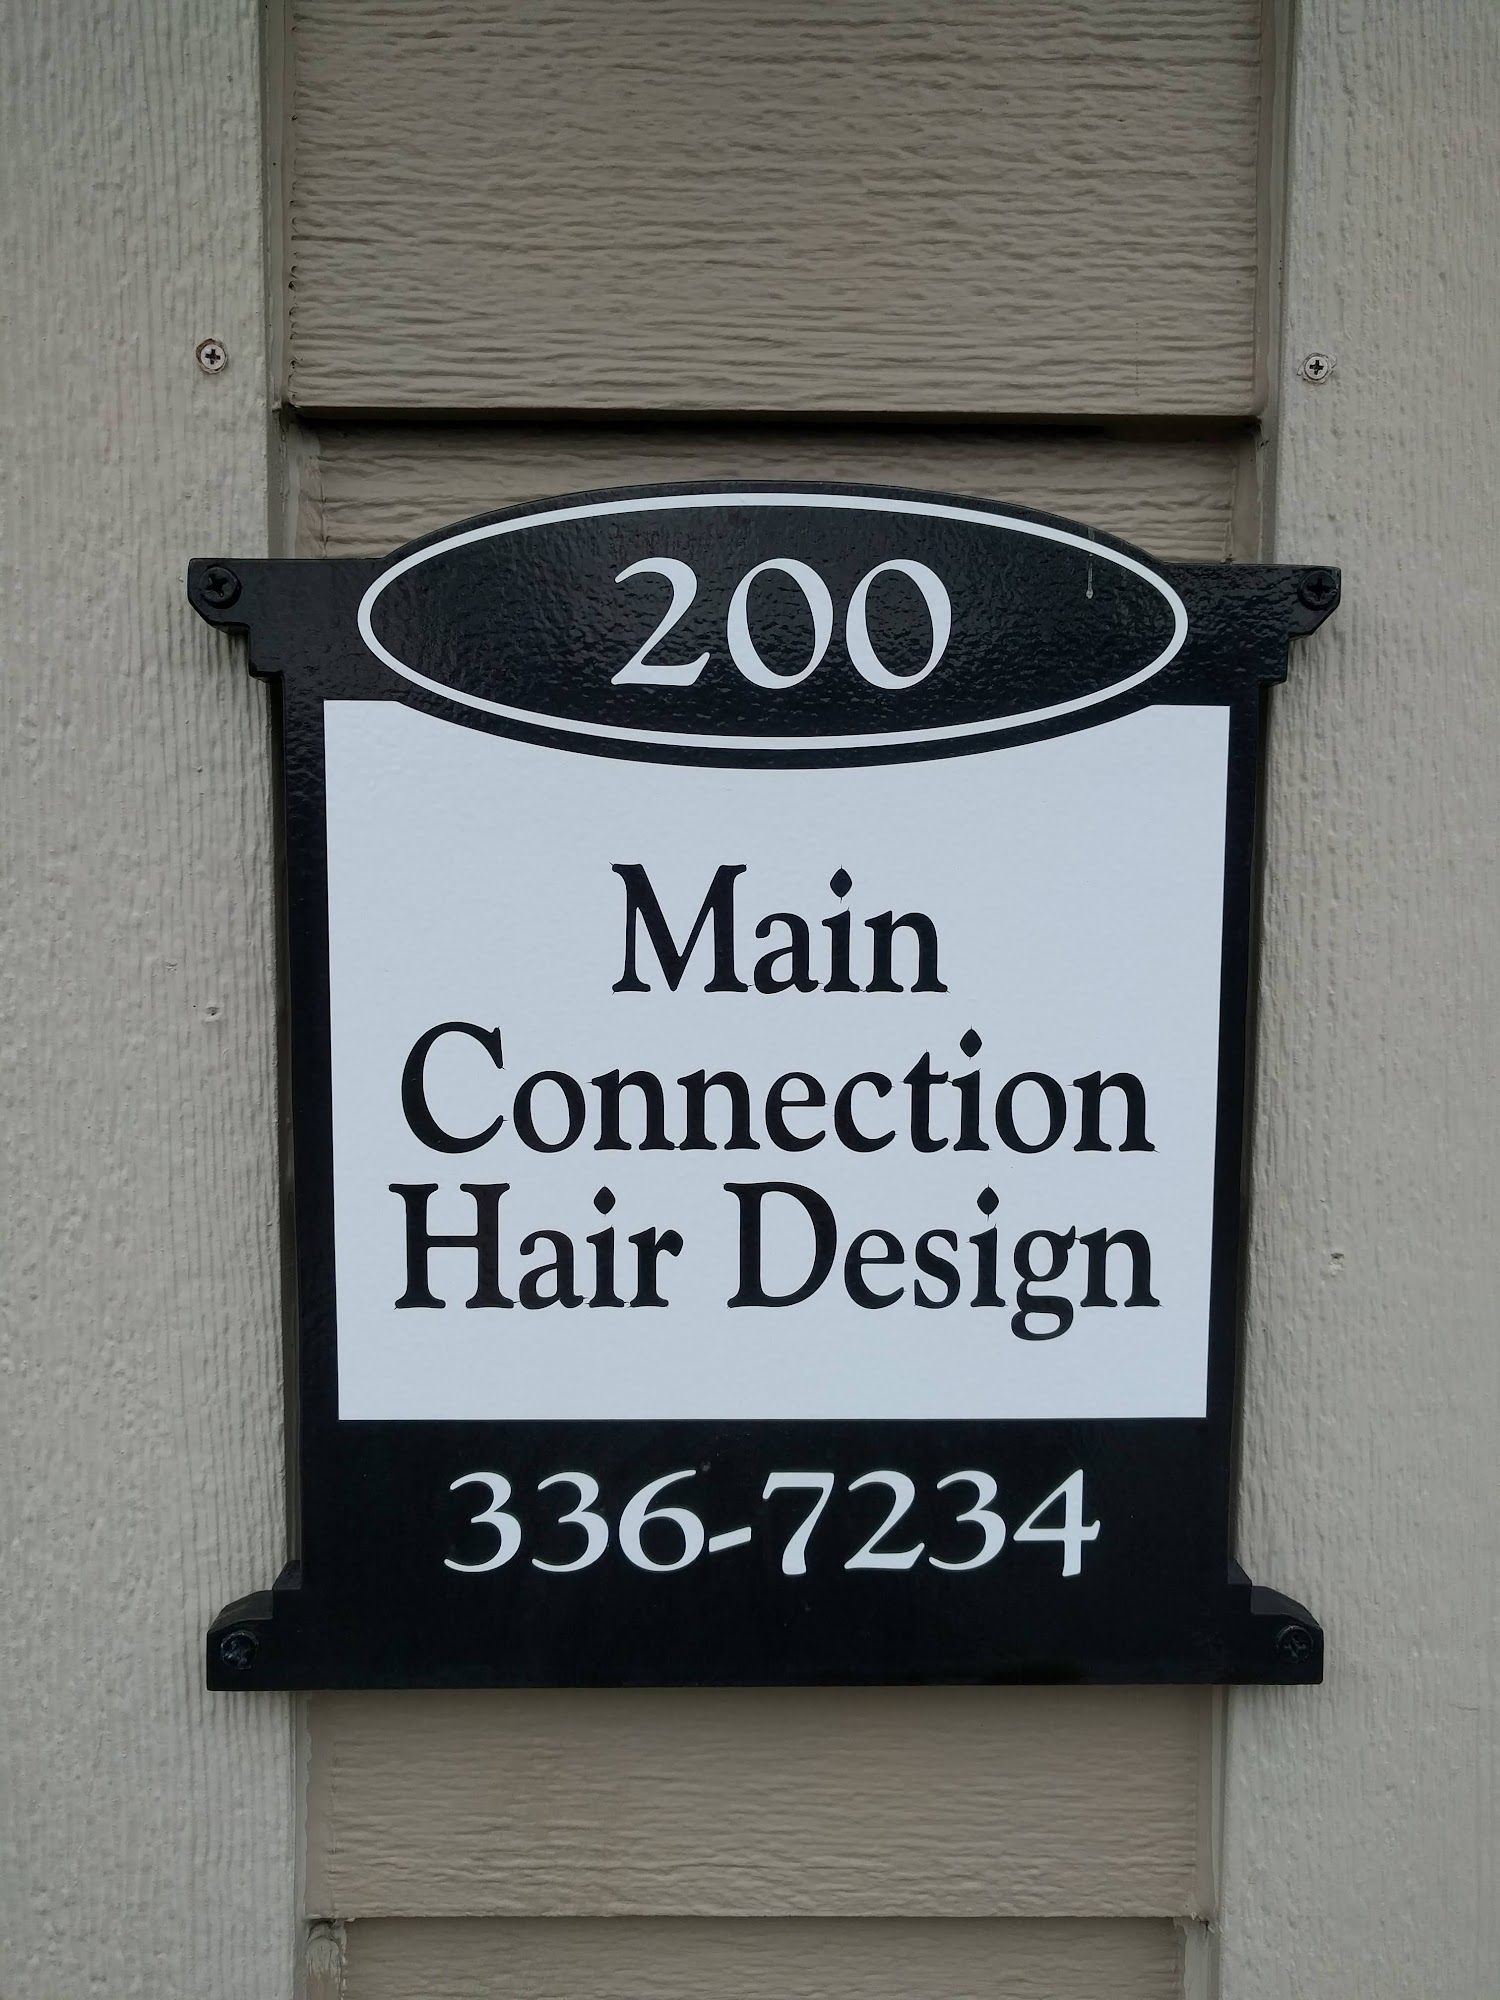 Main Connection Hair Design